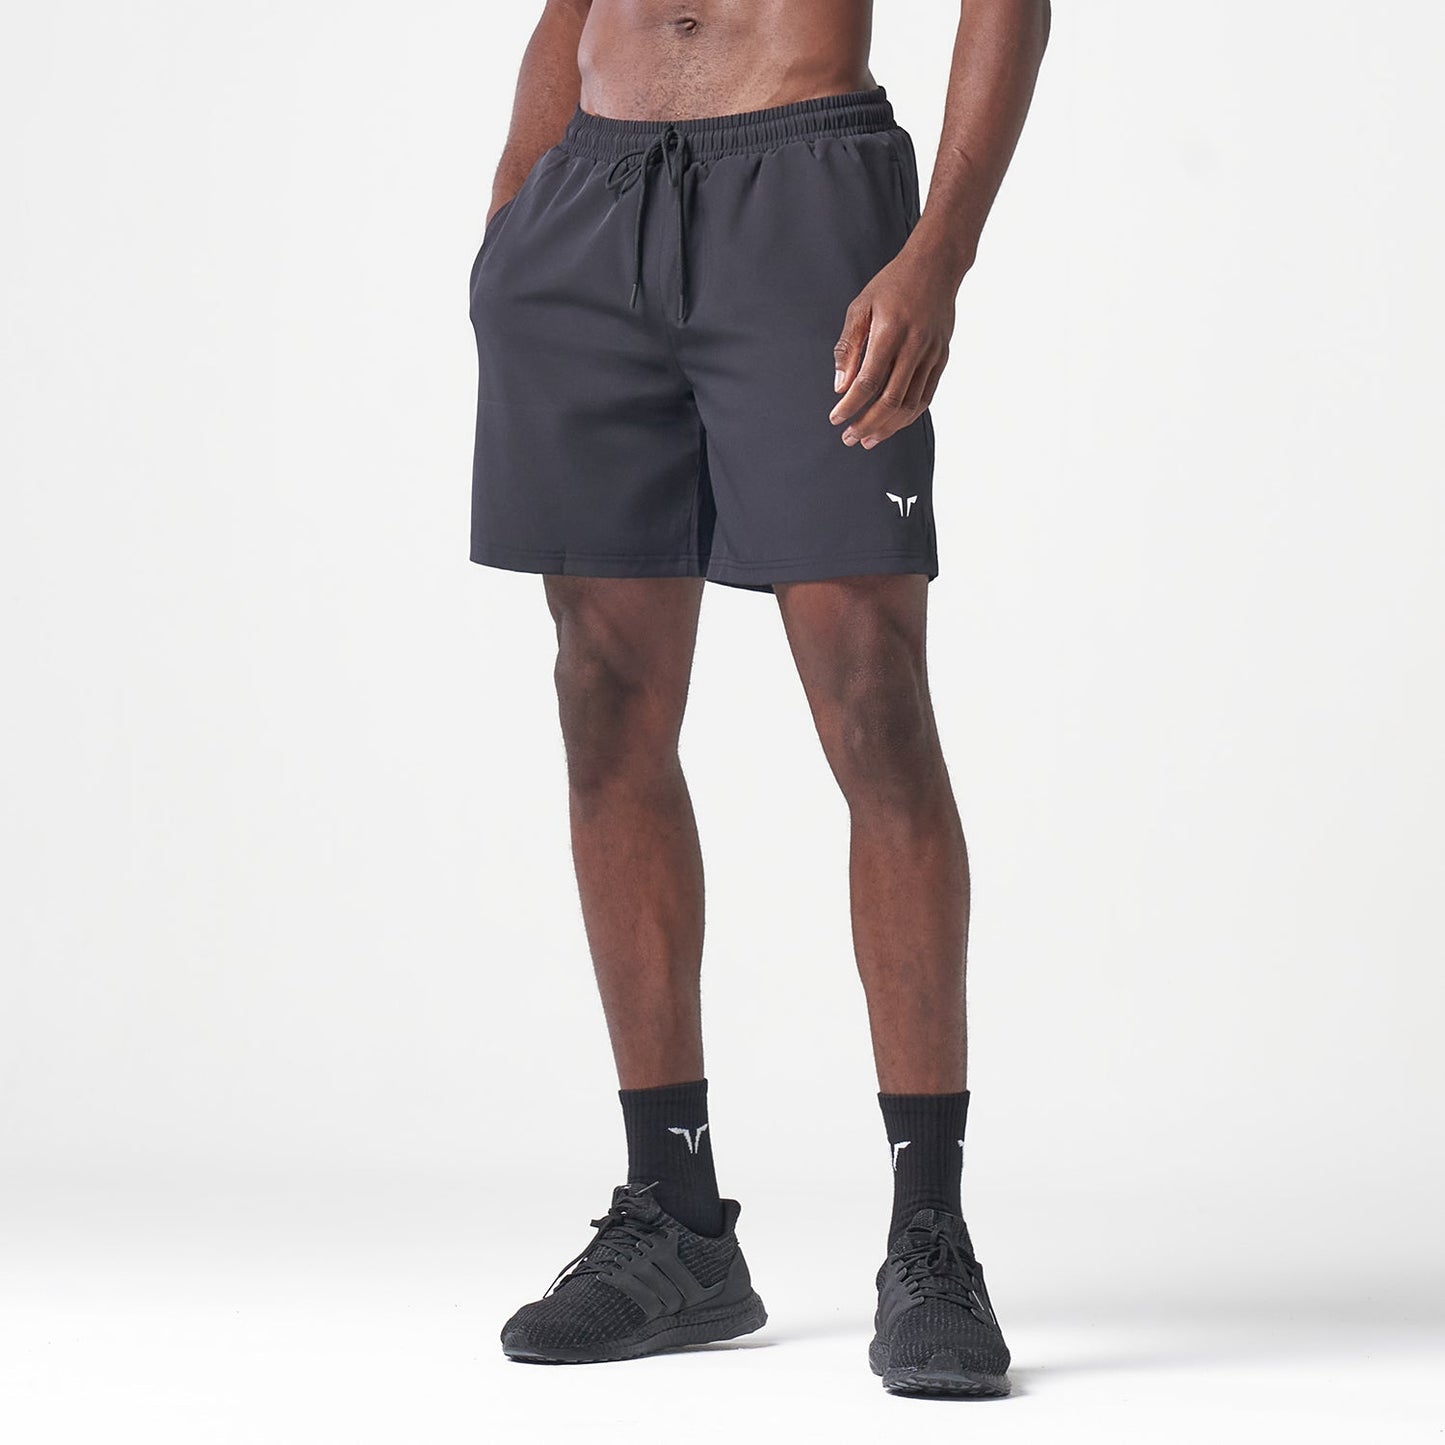 squatwolf-gym-wear-essential-7-inch-shorts-bundle-2-workout-short-for-men